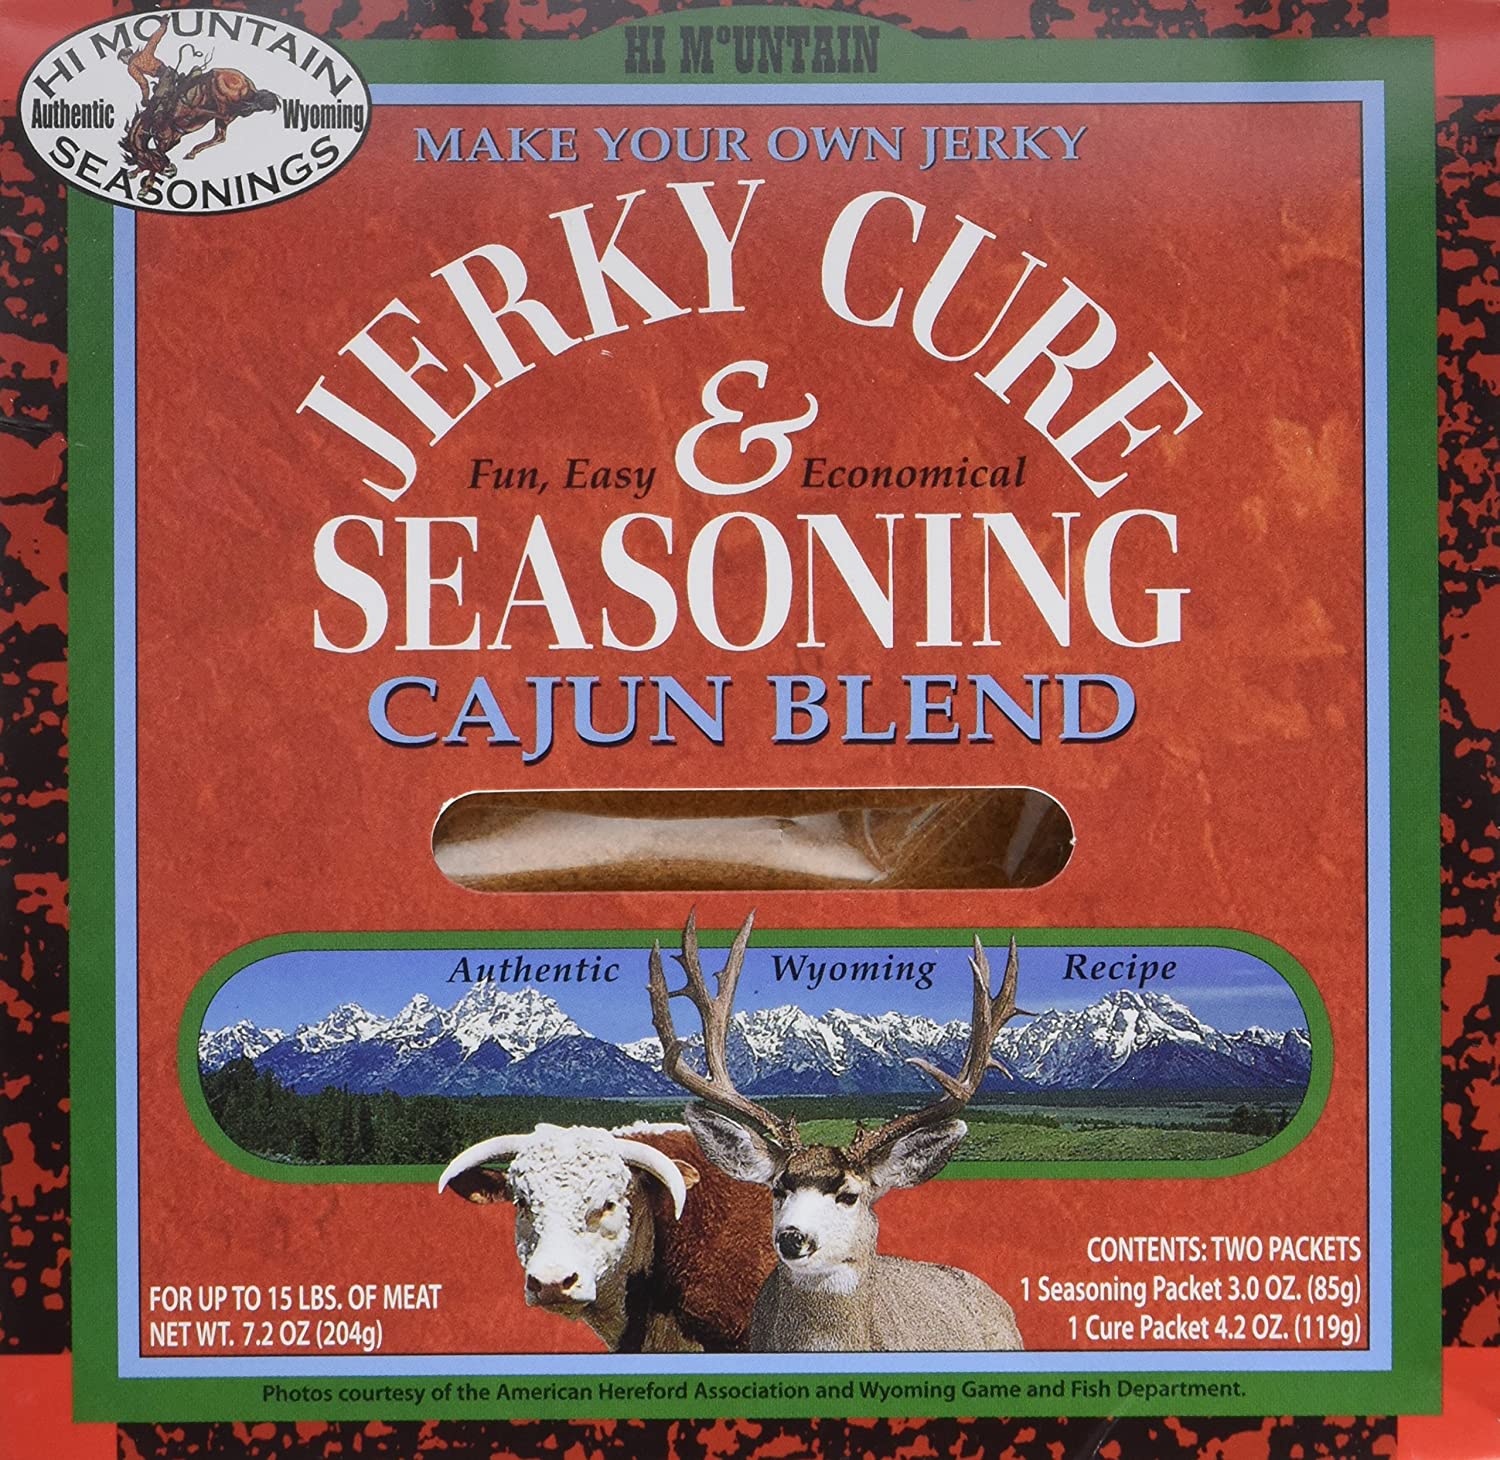 Hi Mountain Jerky Cure & Seasoning - Cajun